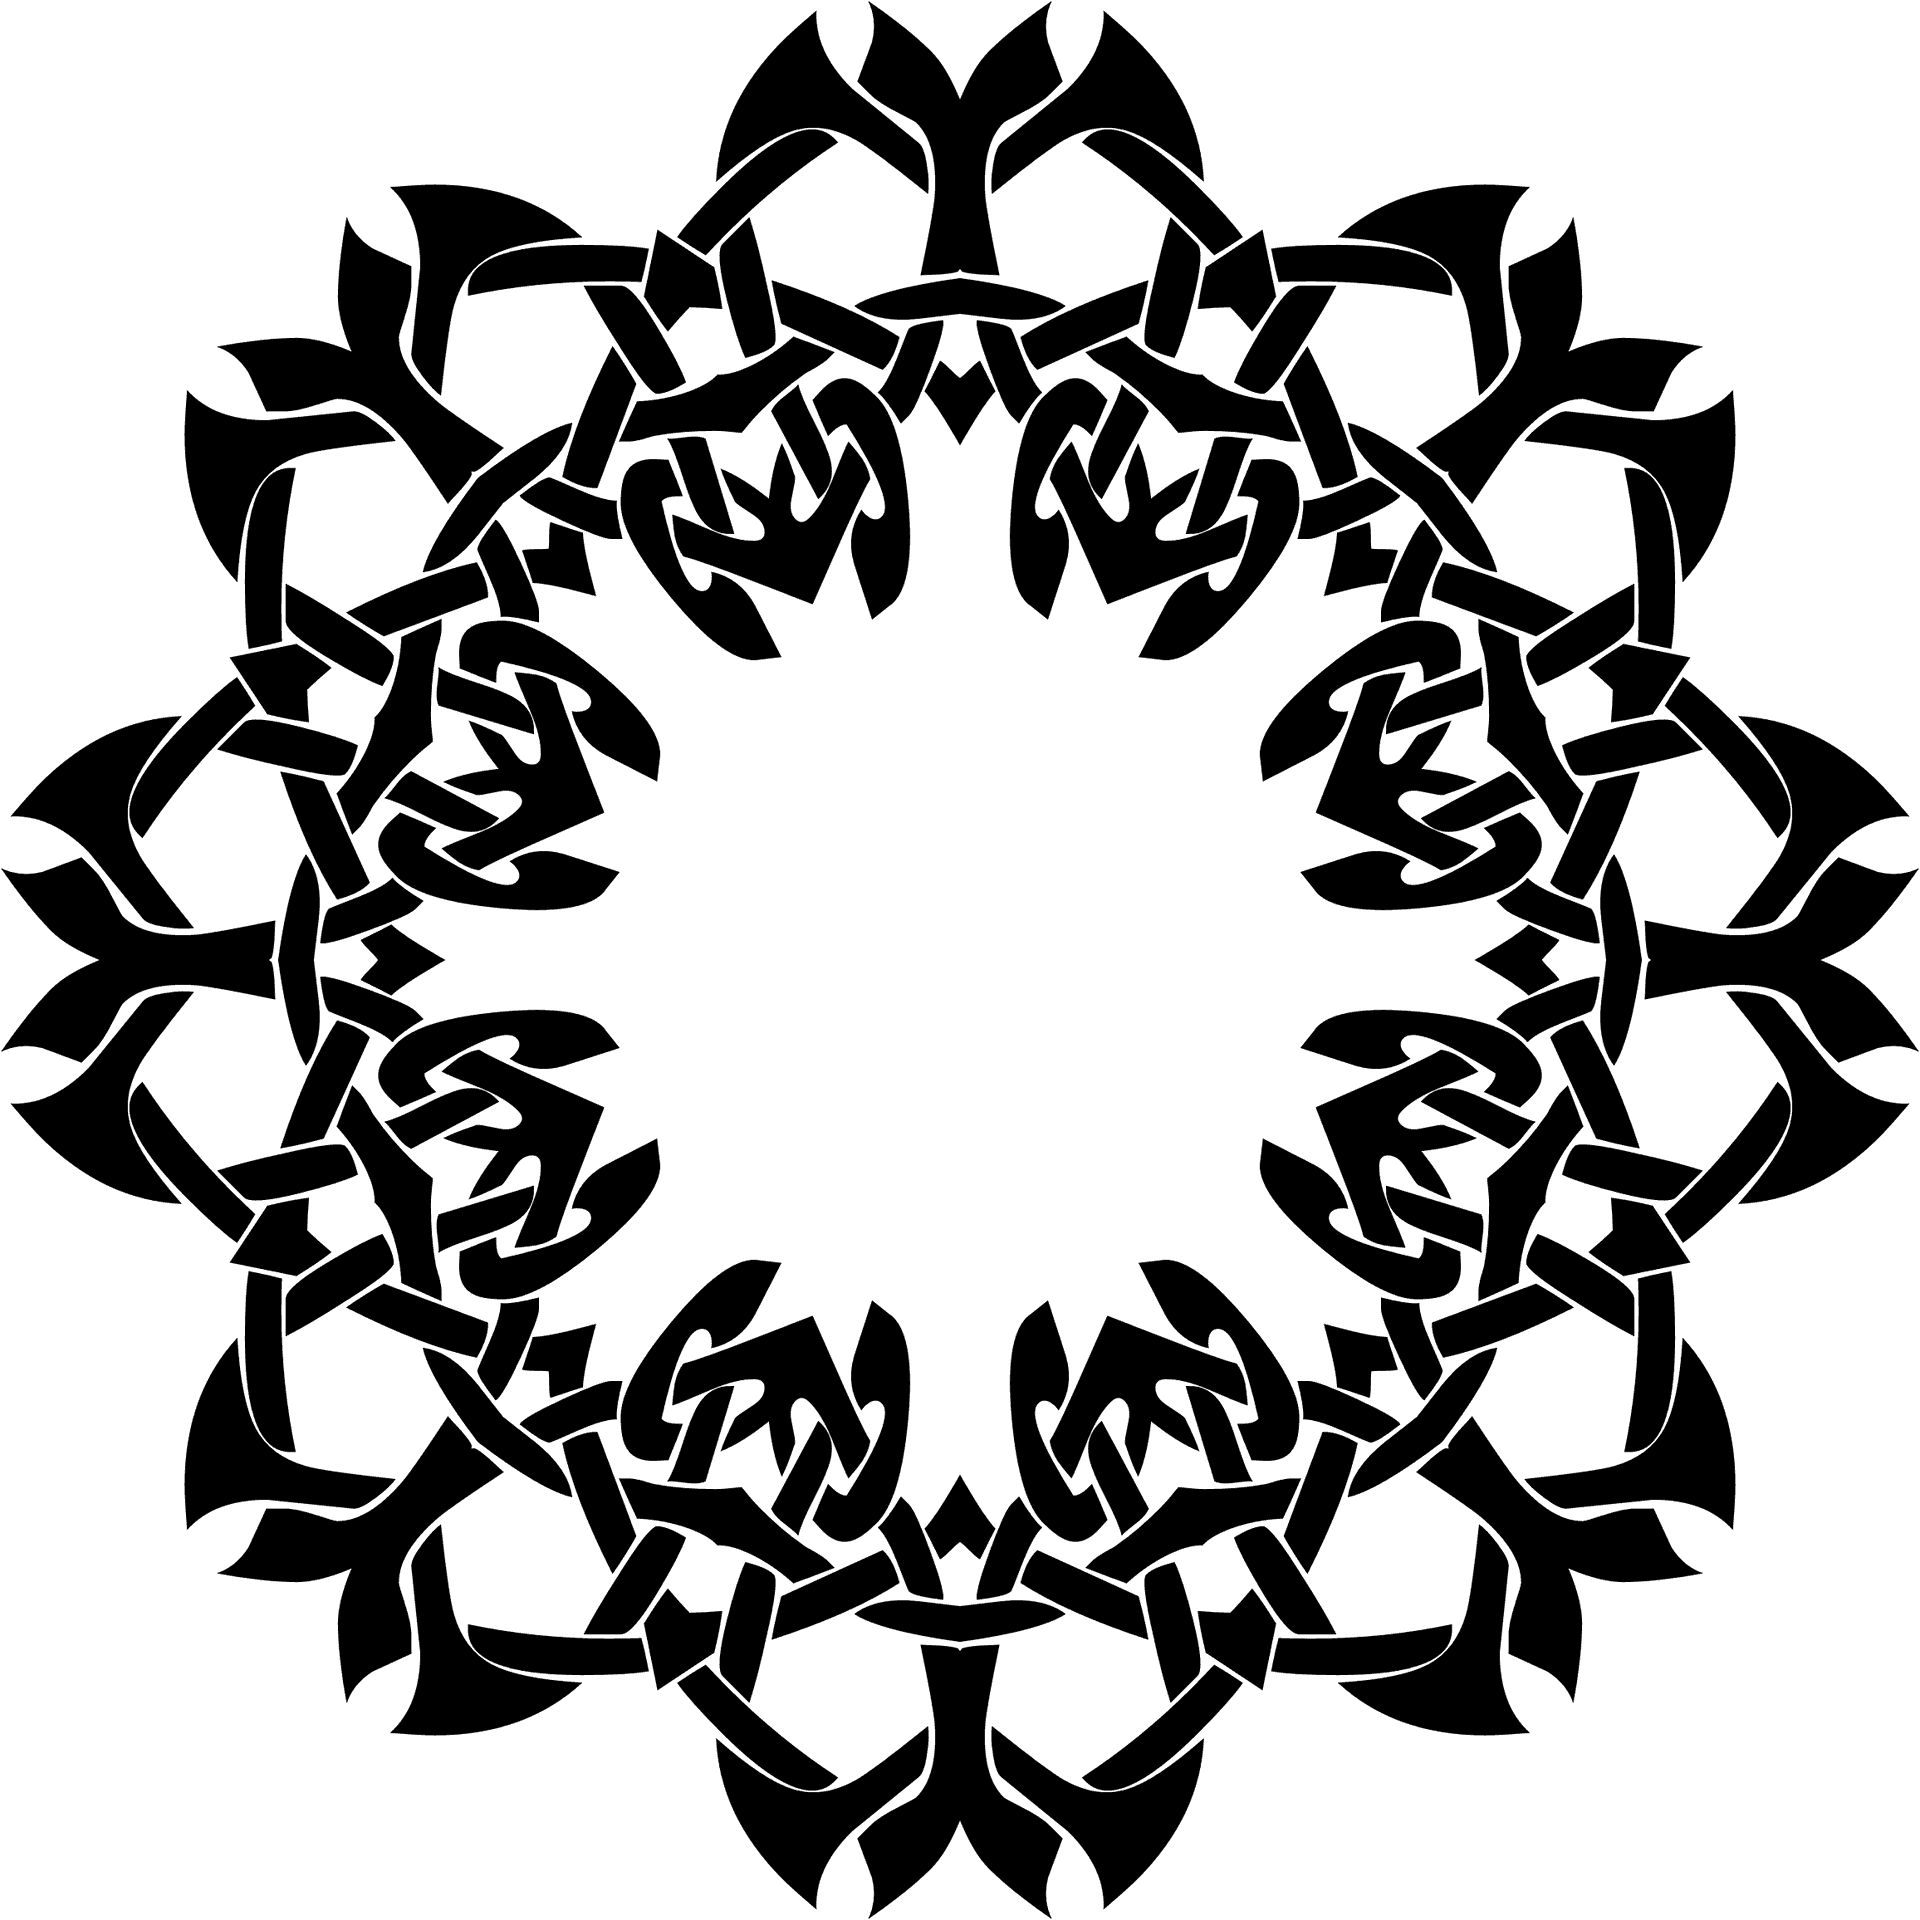 Abstract Floral Mandala Design PNG image